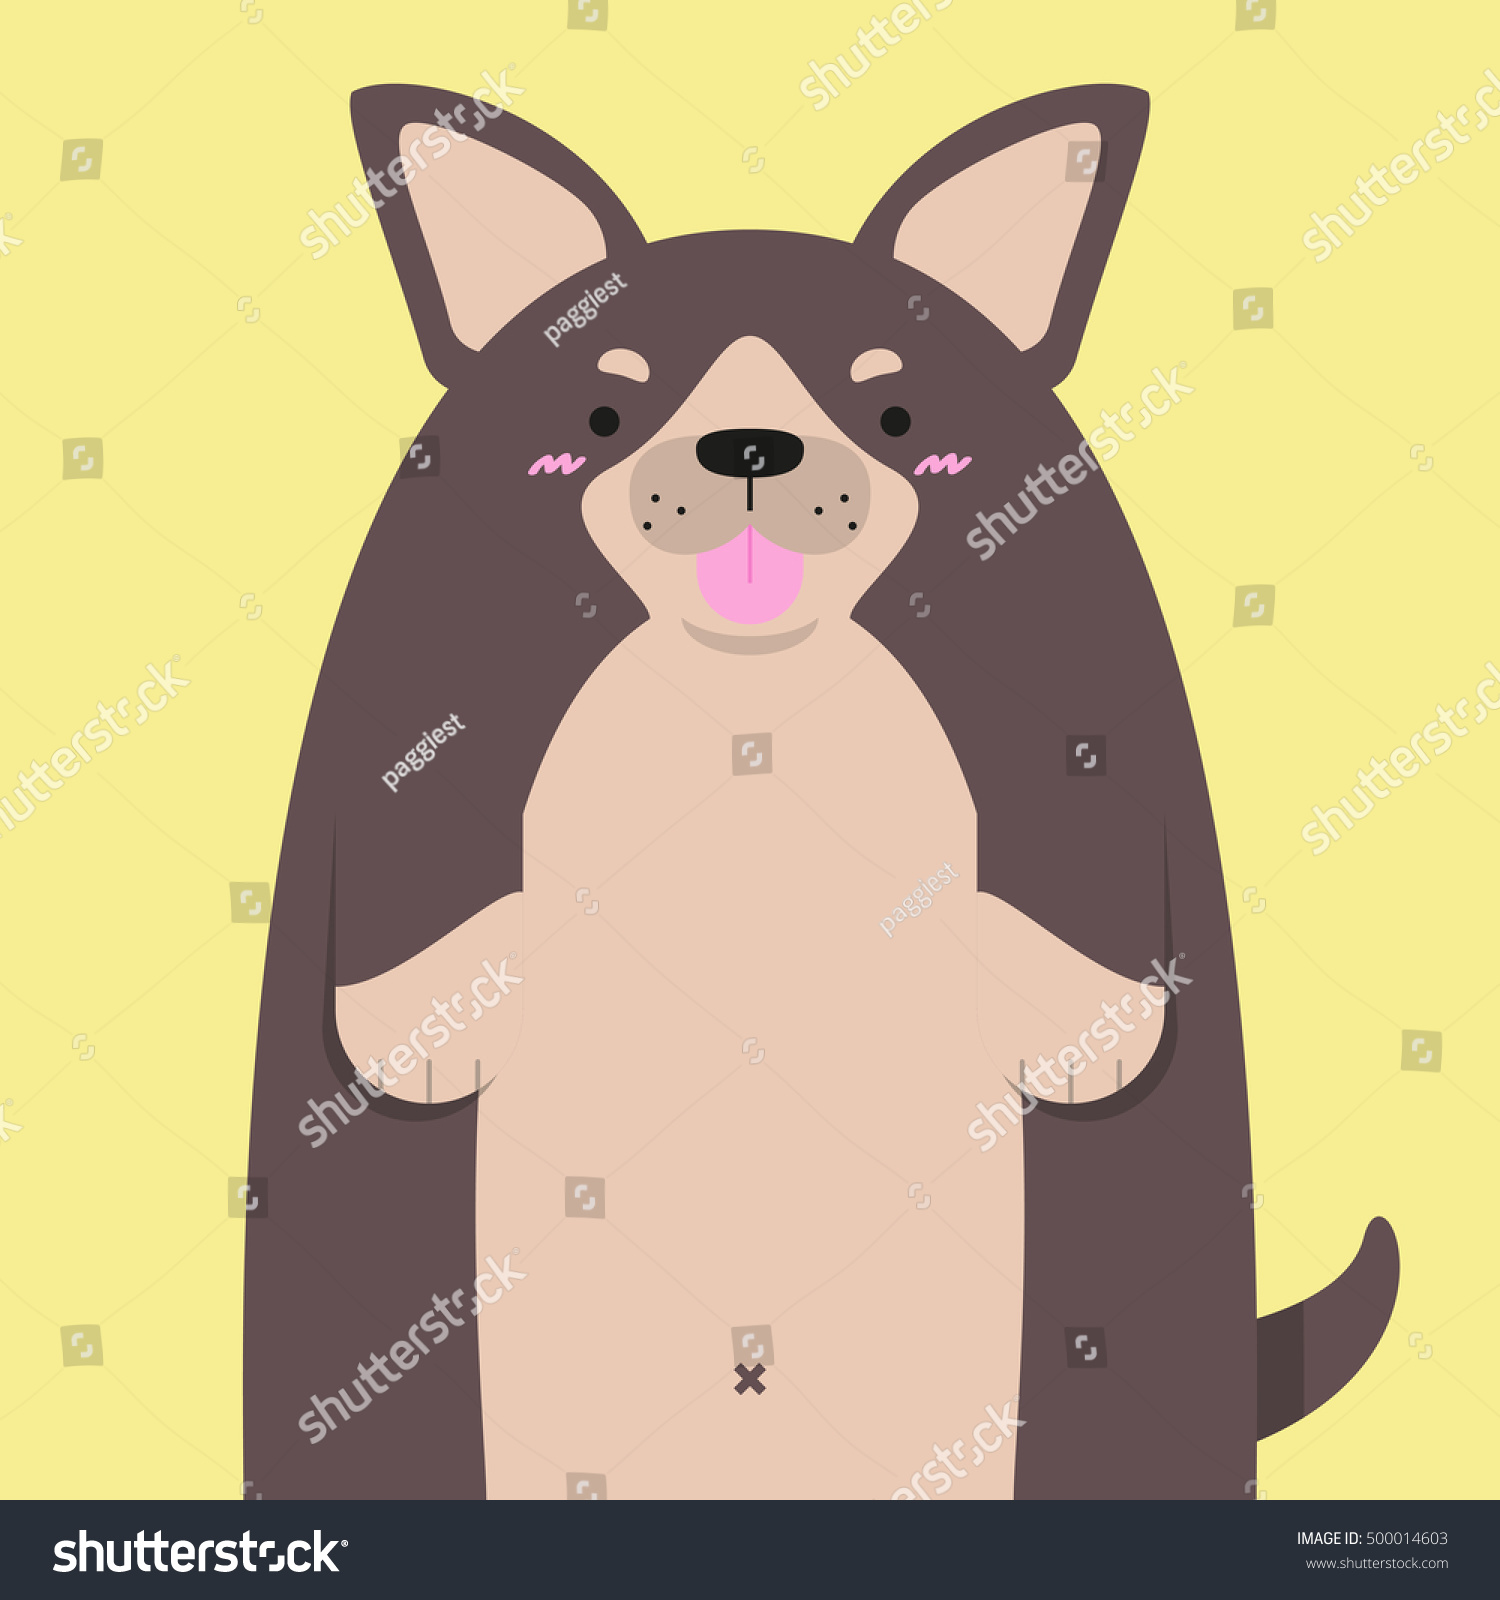 Cute Big Fat Chihuahua Dog On Stock Vector Royalty Free 500014603